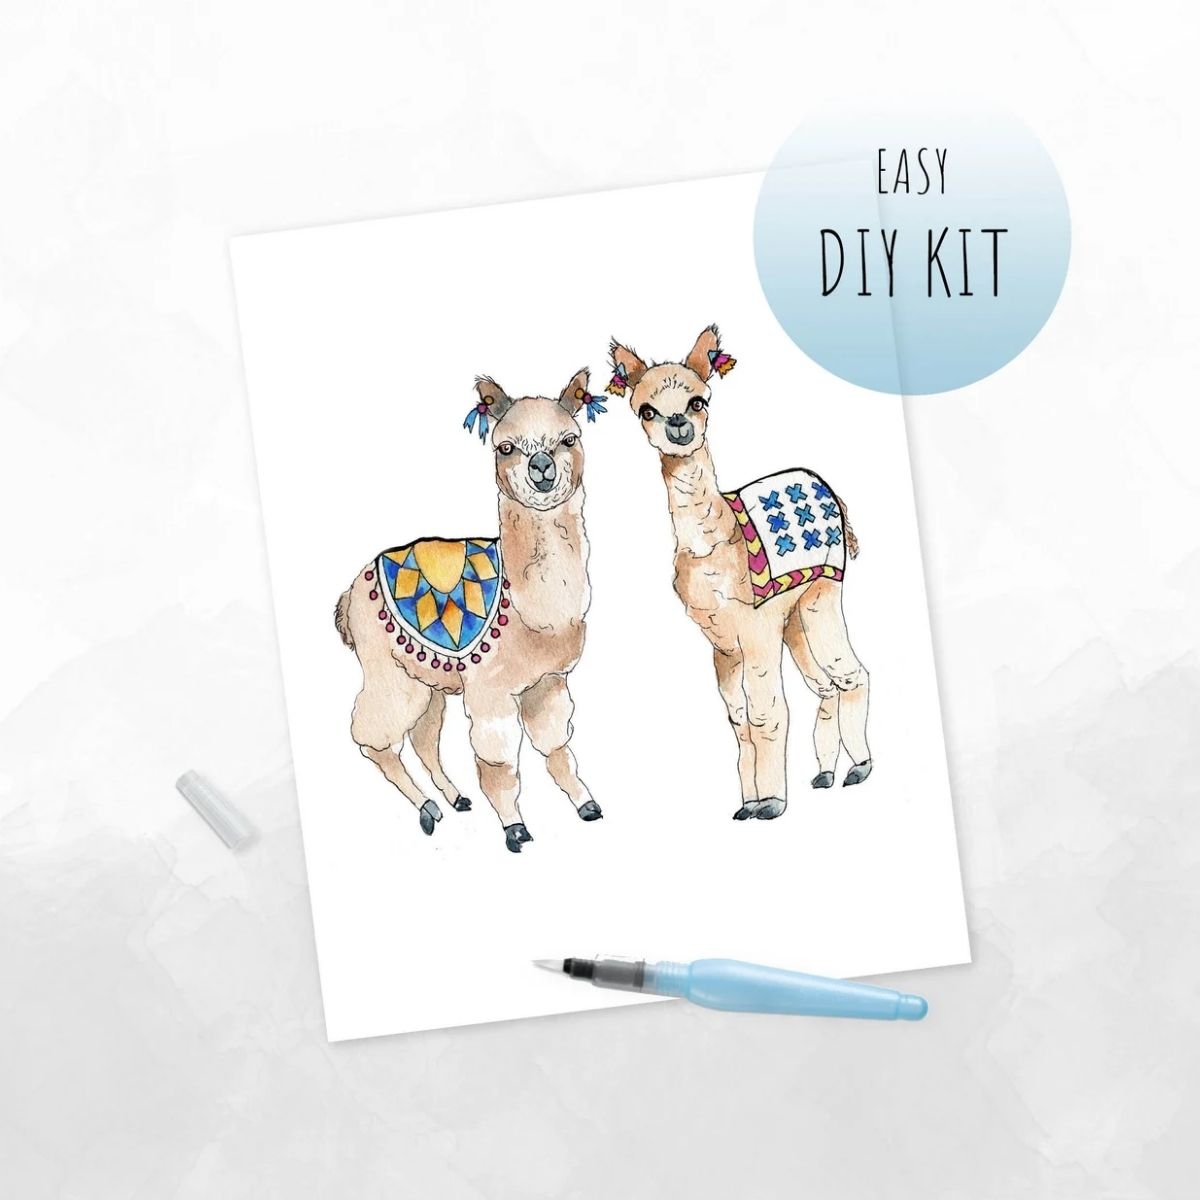 DIY KIT- Watercolor Mr. & Mrs. Alpacas